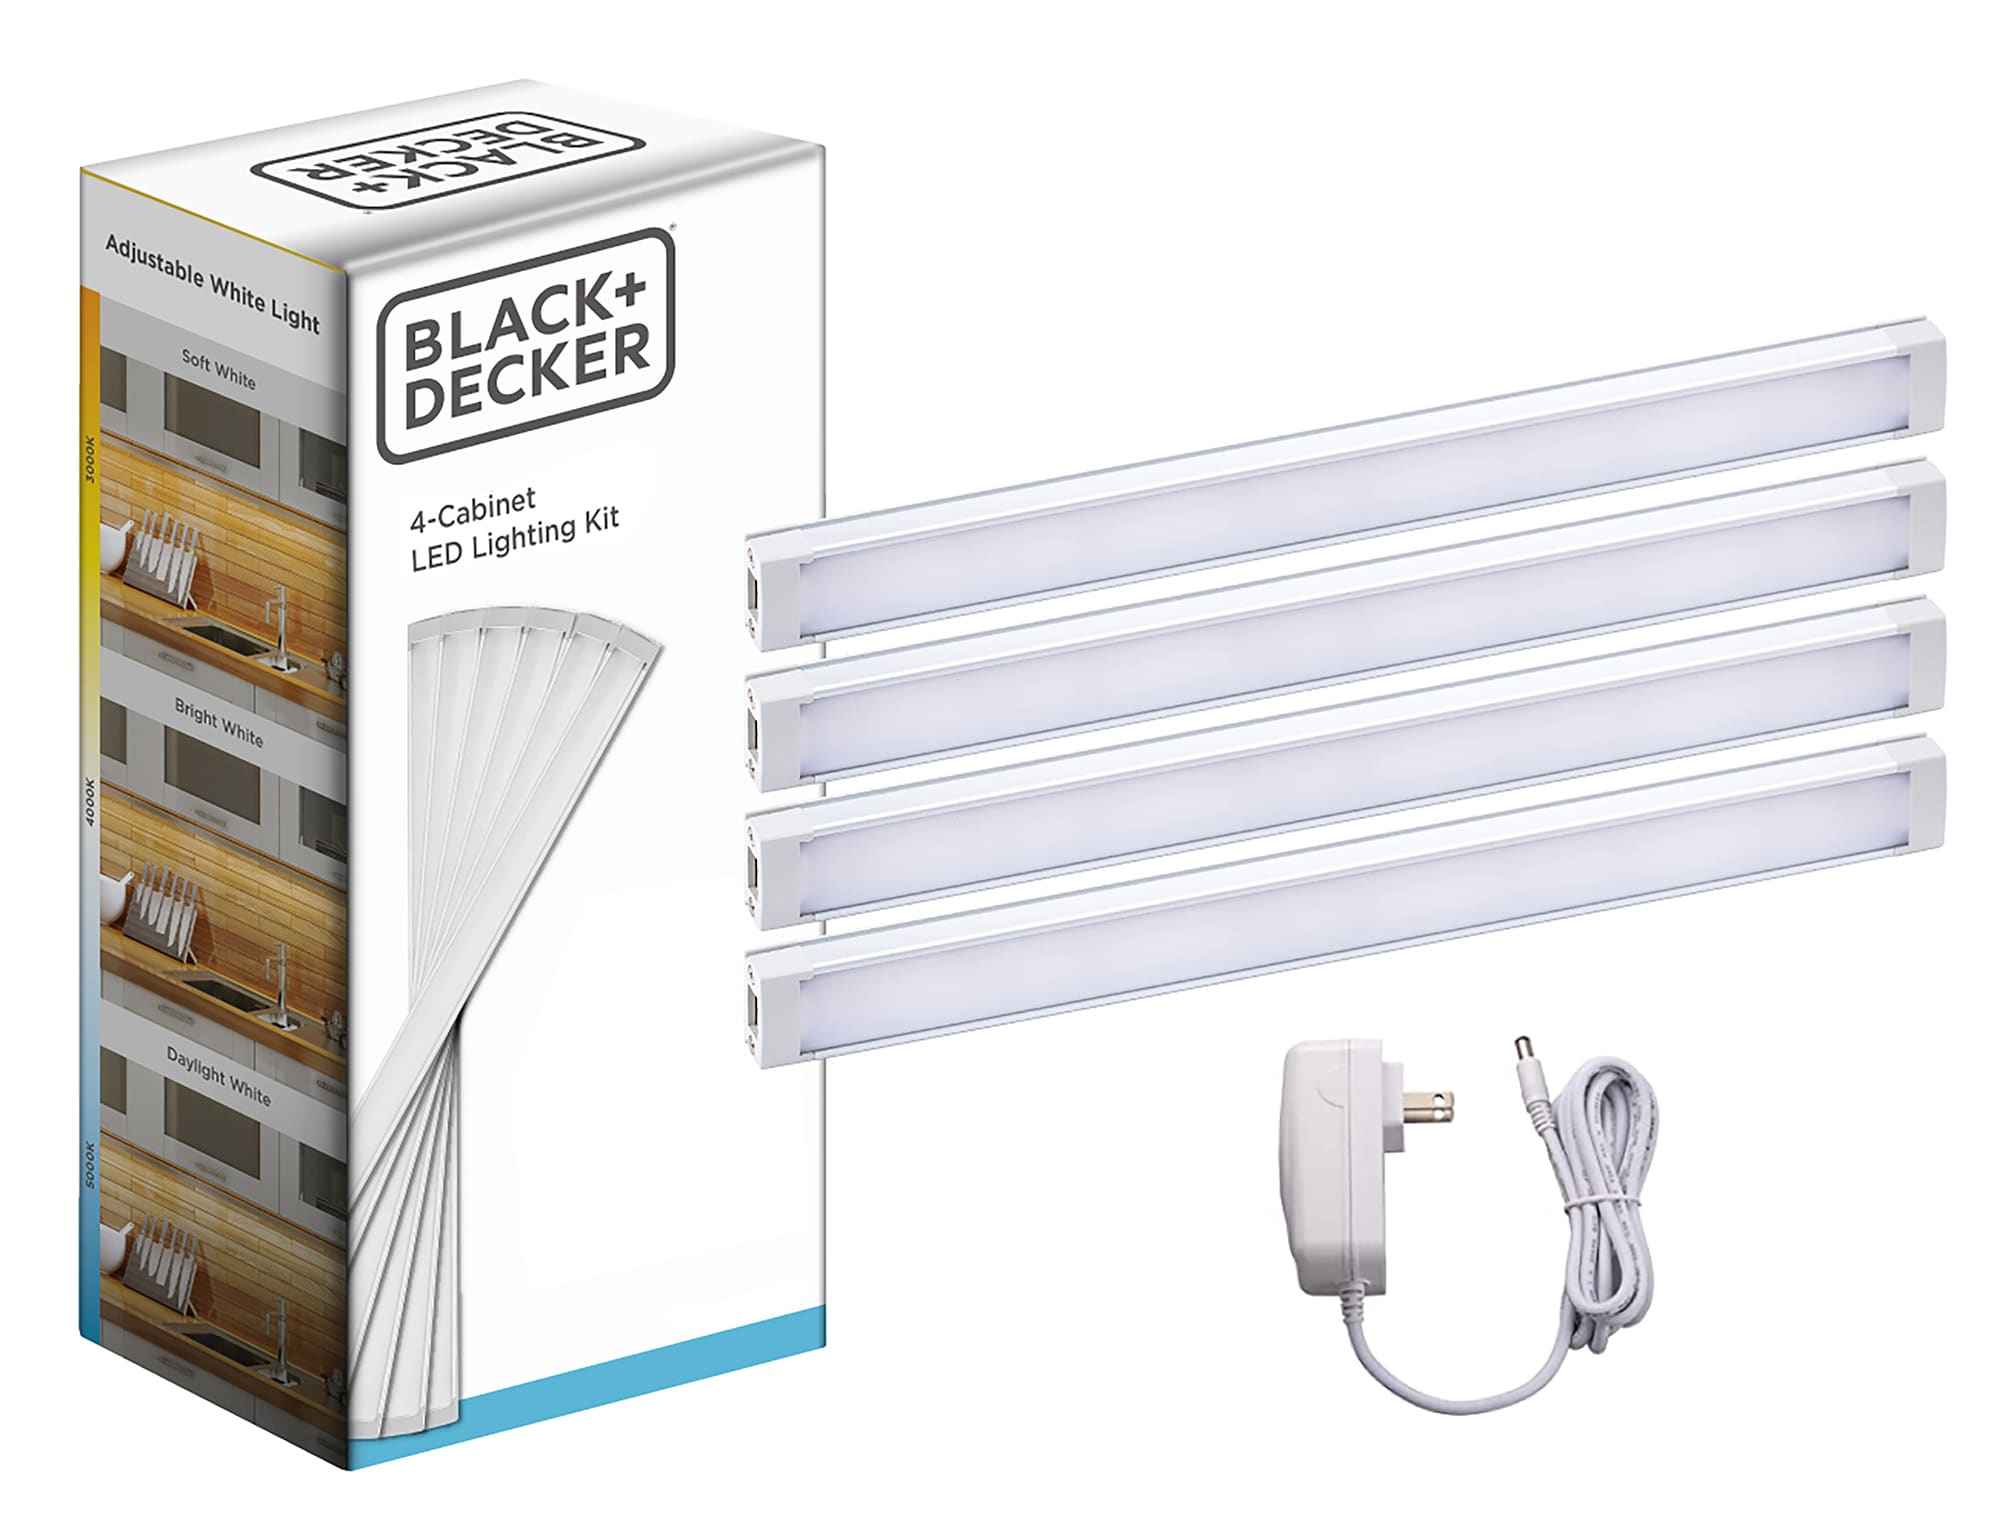 New Release BLACK+DECKER Alexa Cabinet Light Bars Review 